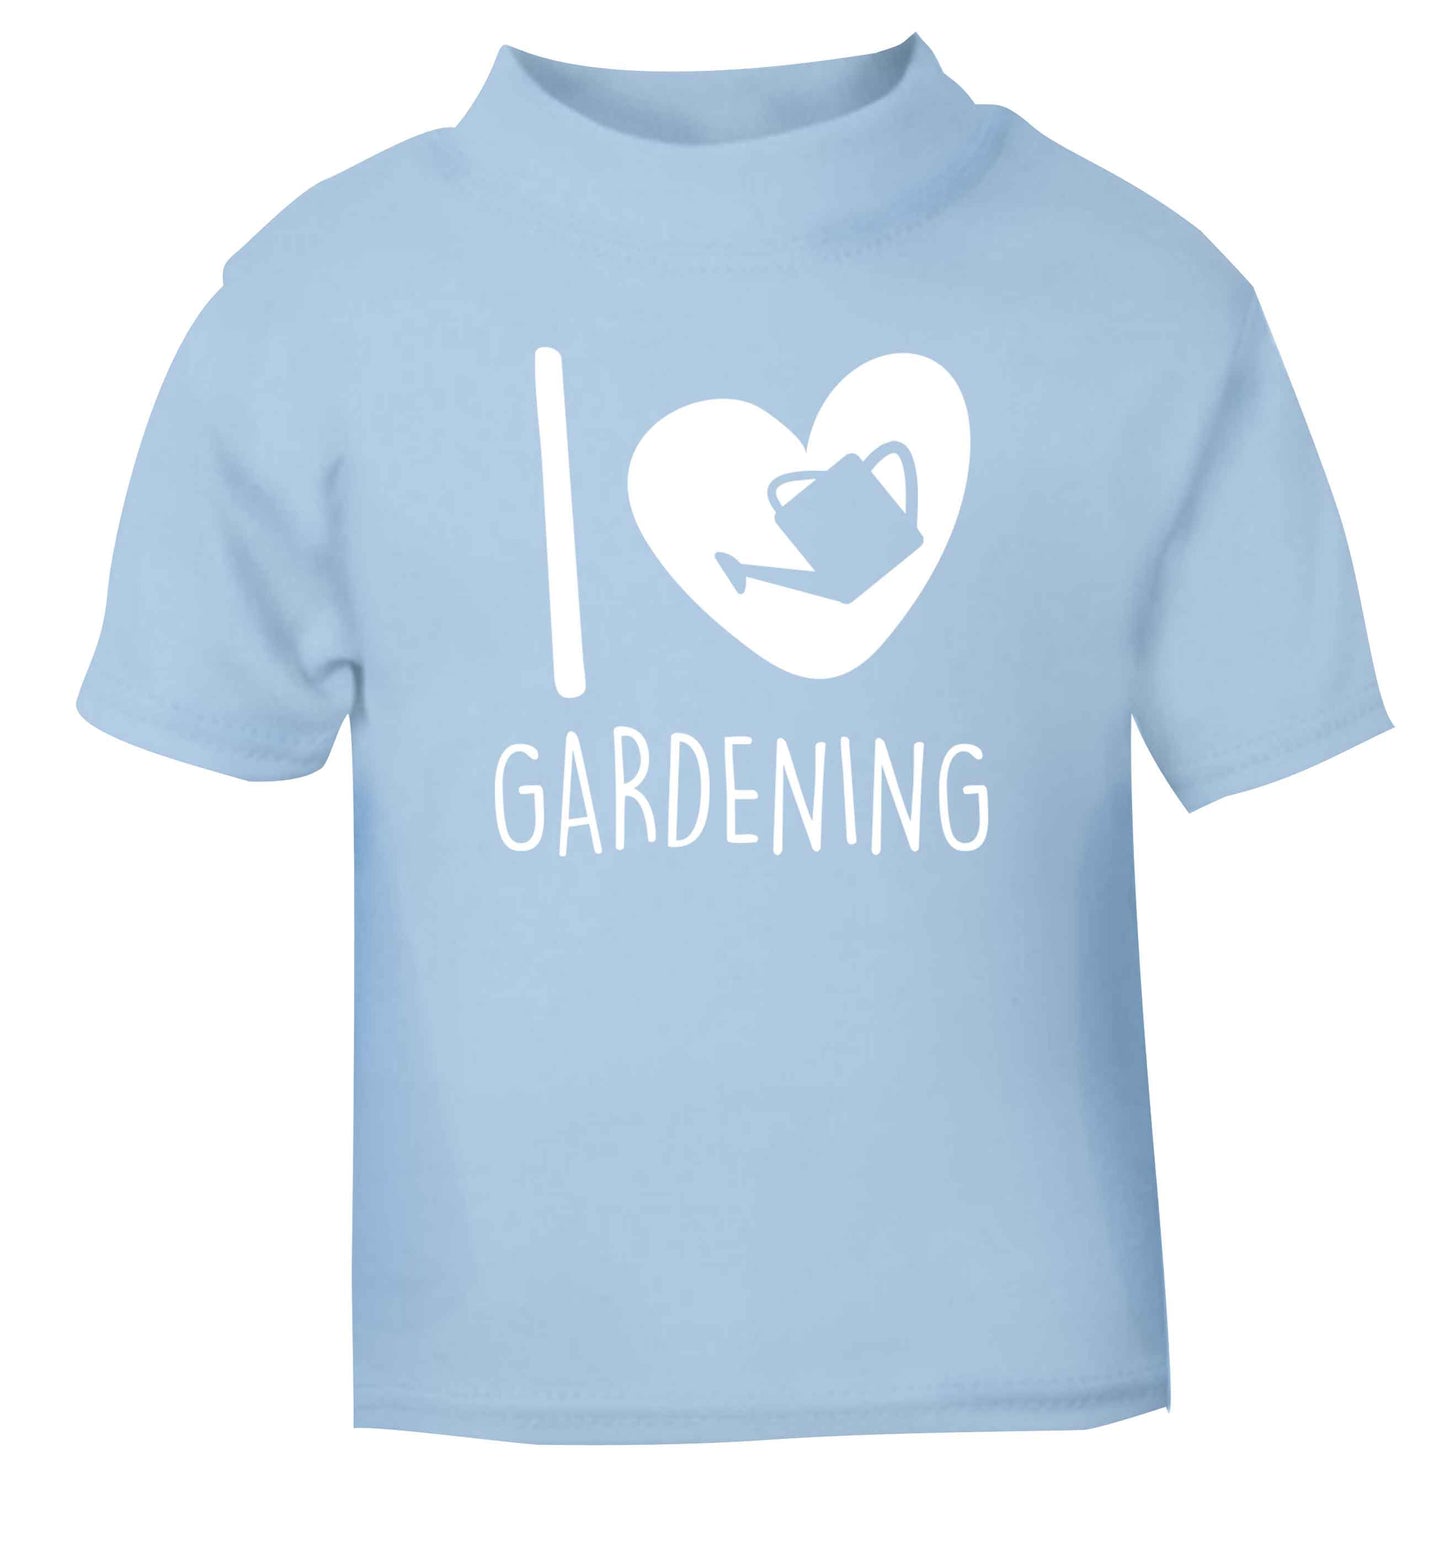 I love gardening light blue Baby Toddler Tshirt 2 Years